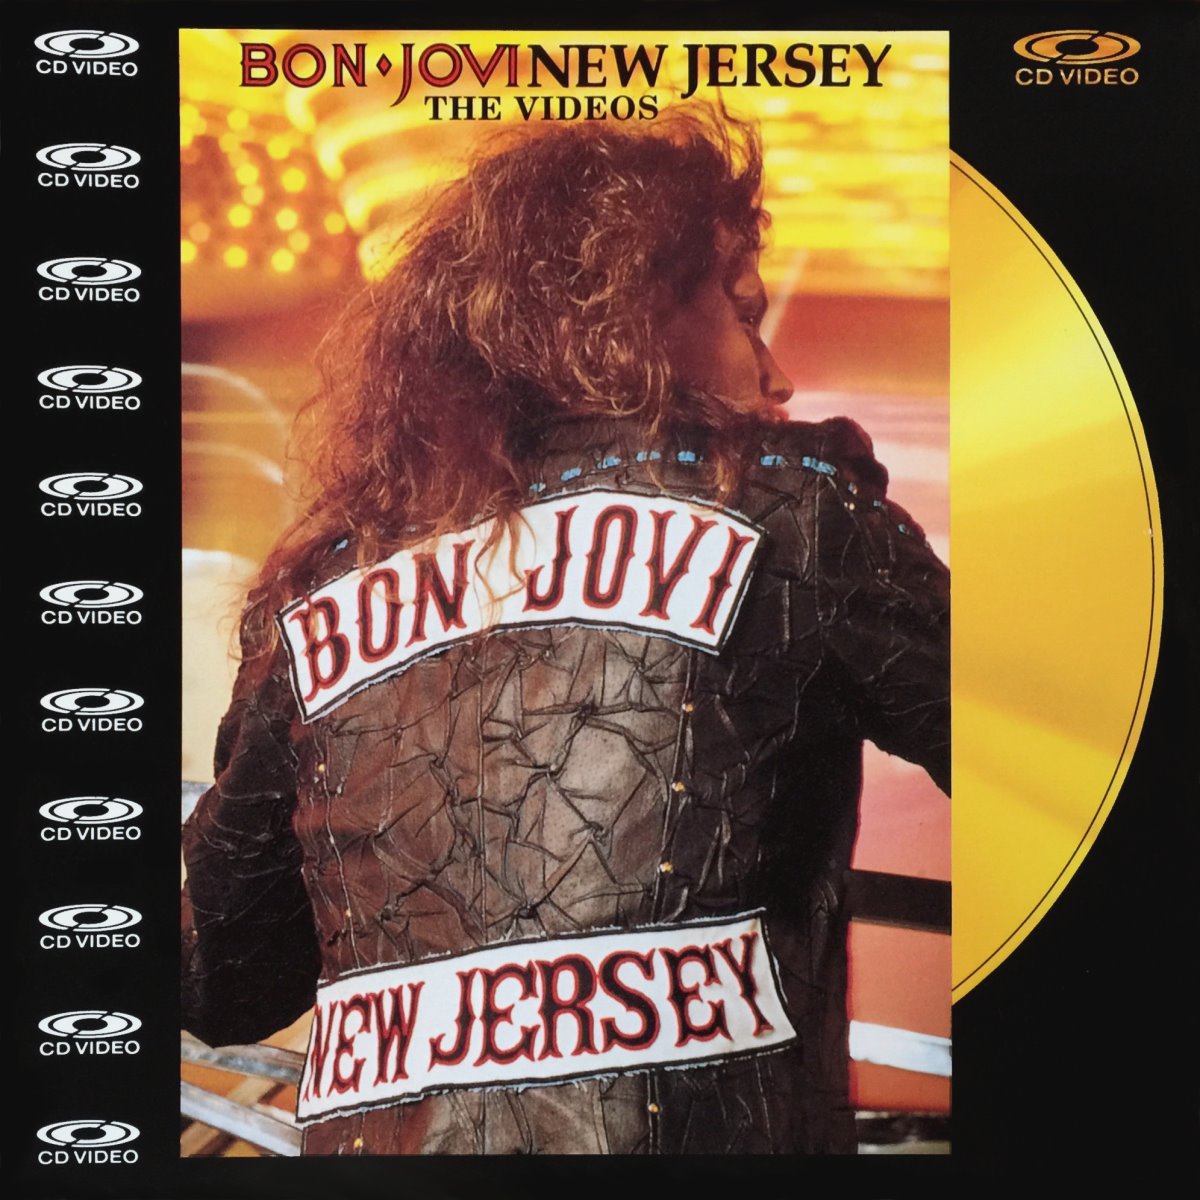 Cover - Bon Jovi ‎- New Jersey - The Videos.jpg